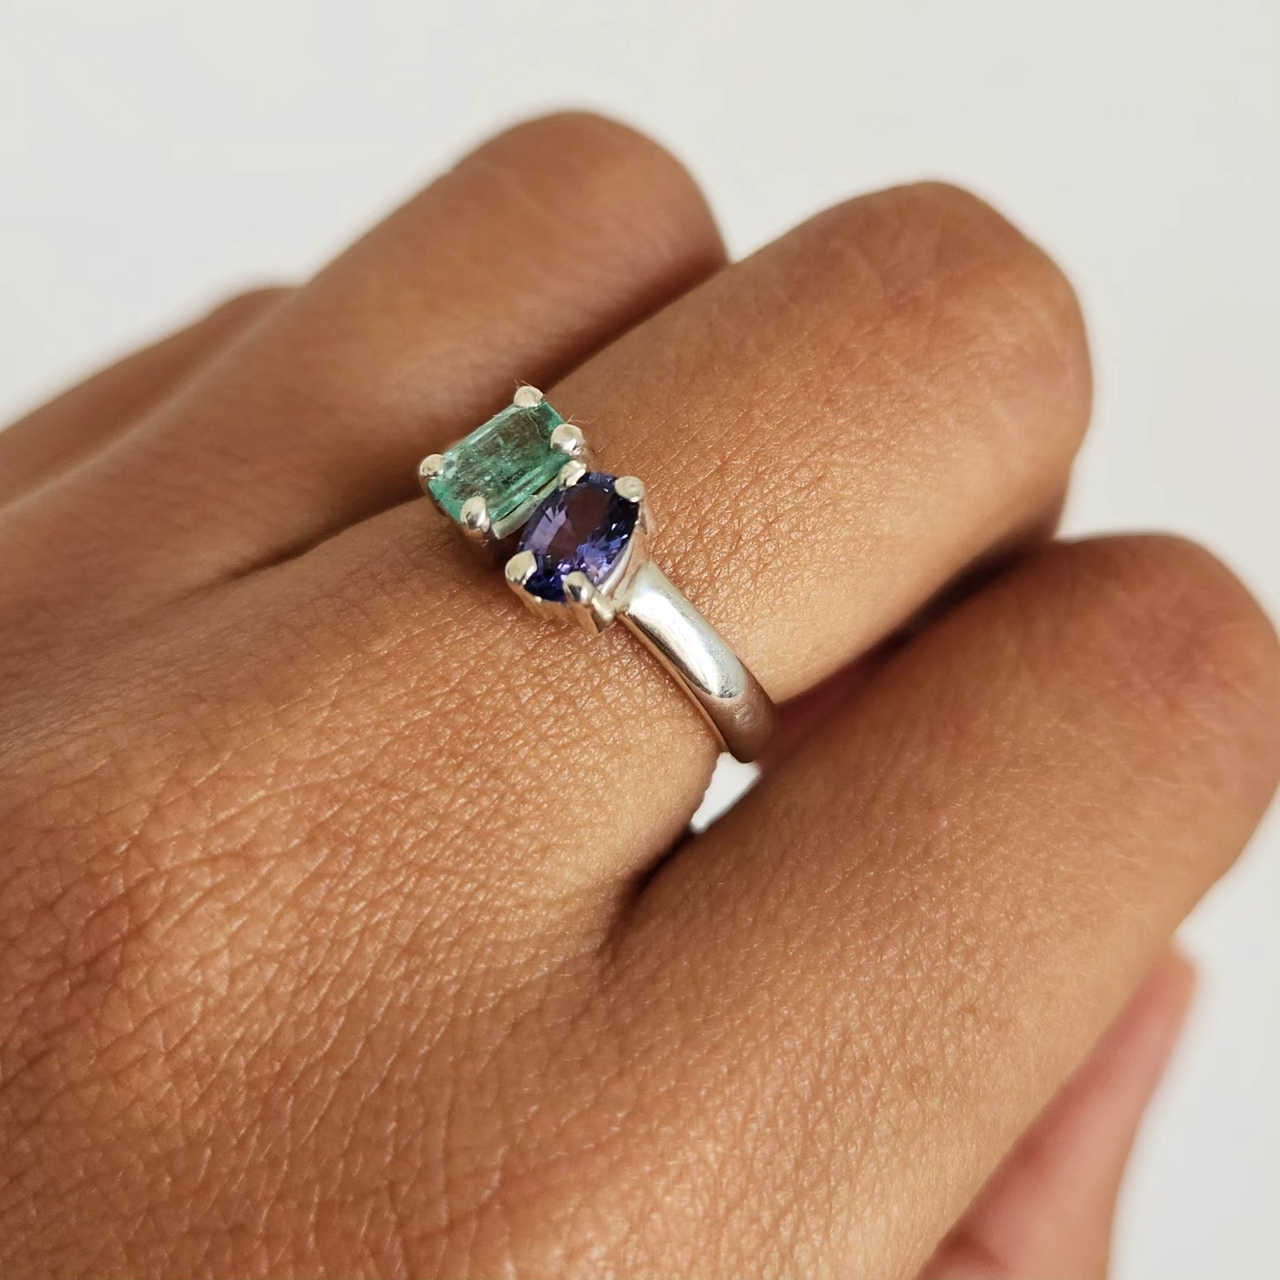 Badiran Ring Bali Silver 925 Emerald and Blue Sapphire Stones